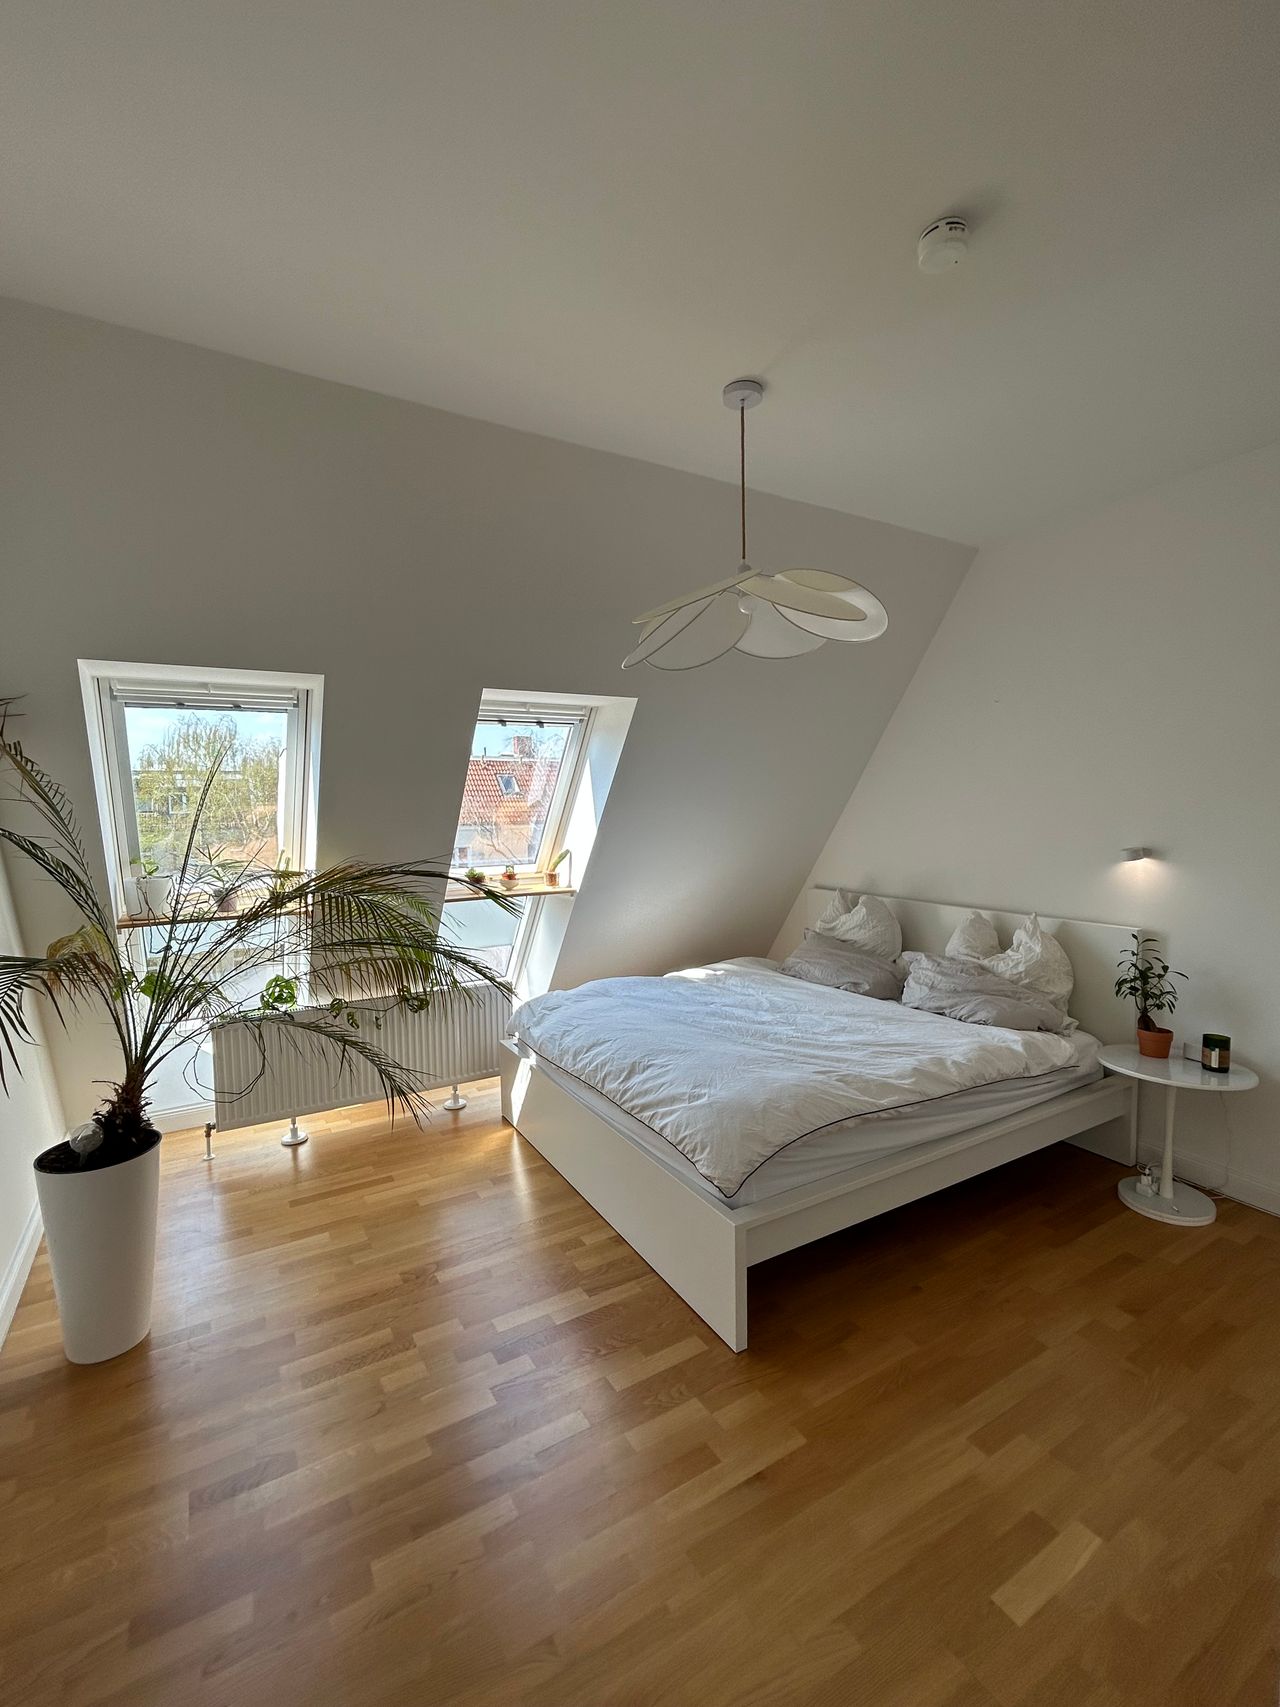 3 room Rooftop Apartment in Lichtenberg